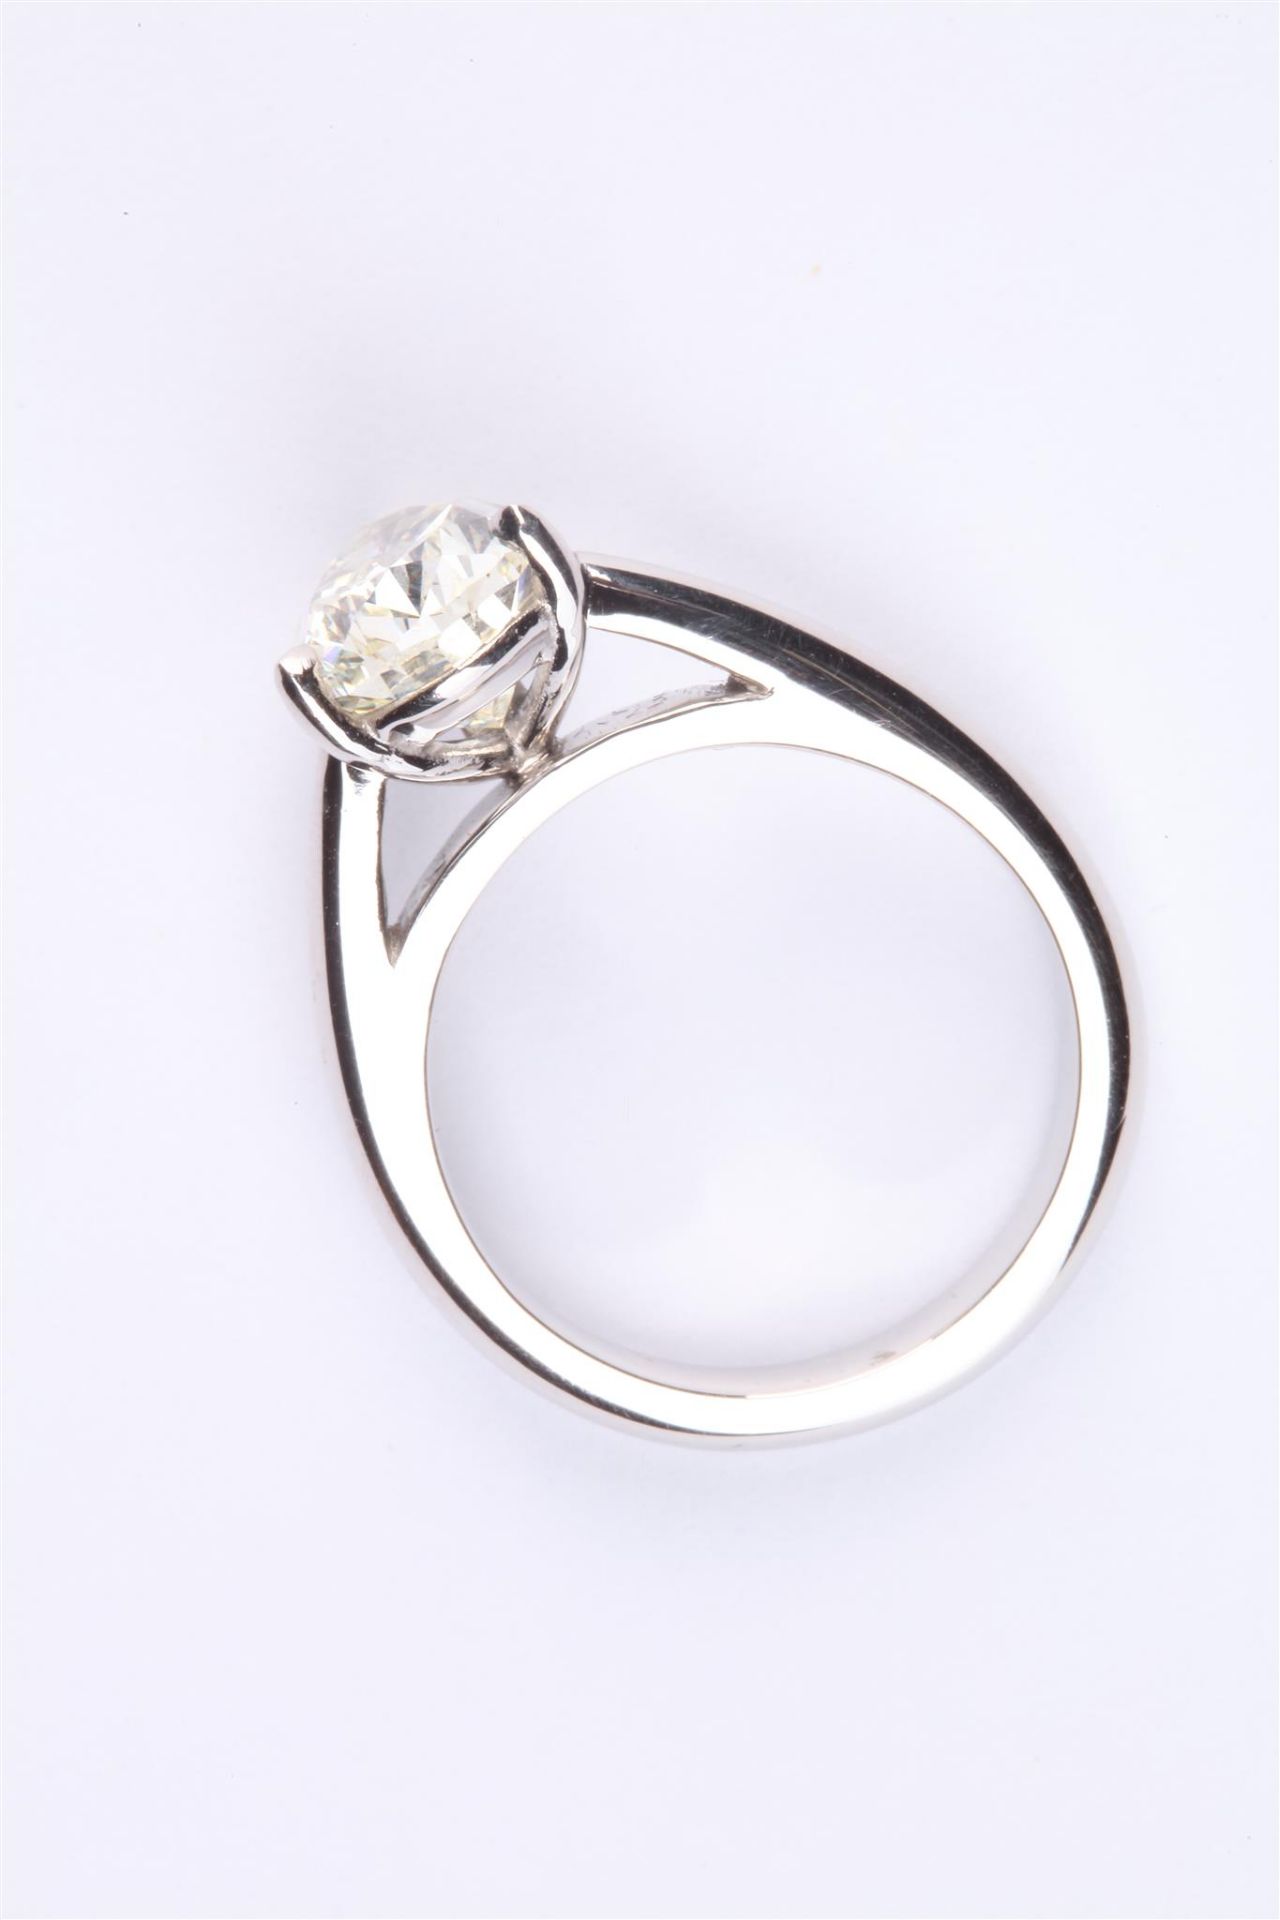 + VAT Stunning Ladies 18ct White Gold 3.28CT Tear Drop Diamond Ring (Heavy Mount) - Image 3 of 4